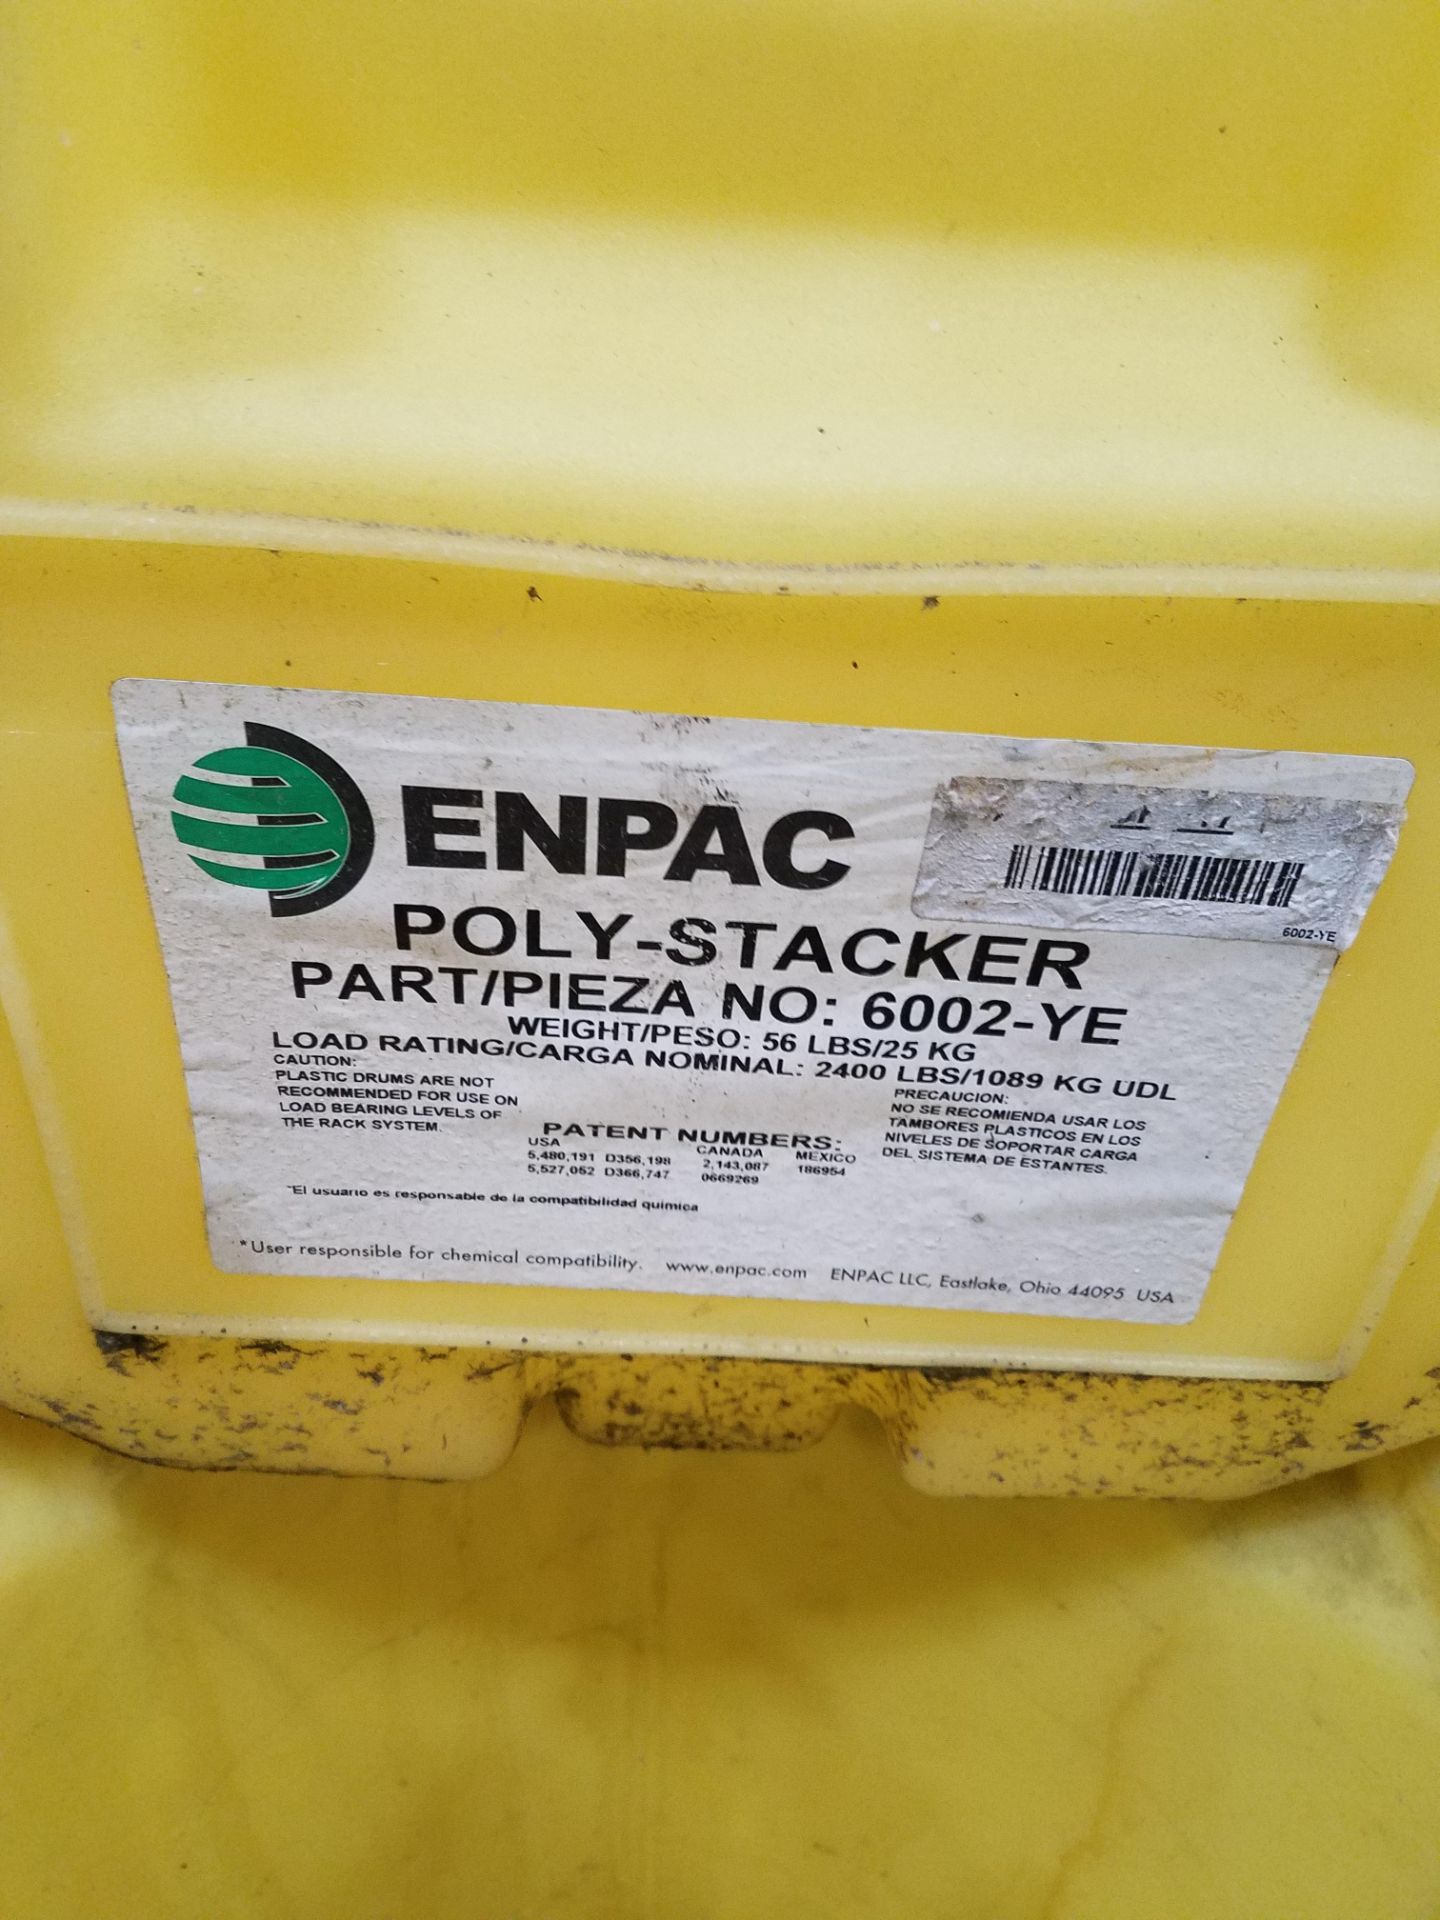 ENPAC POLY-RACKER DRUM SPILL RACKS - Image 2 of 2